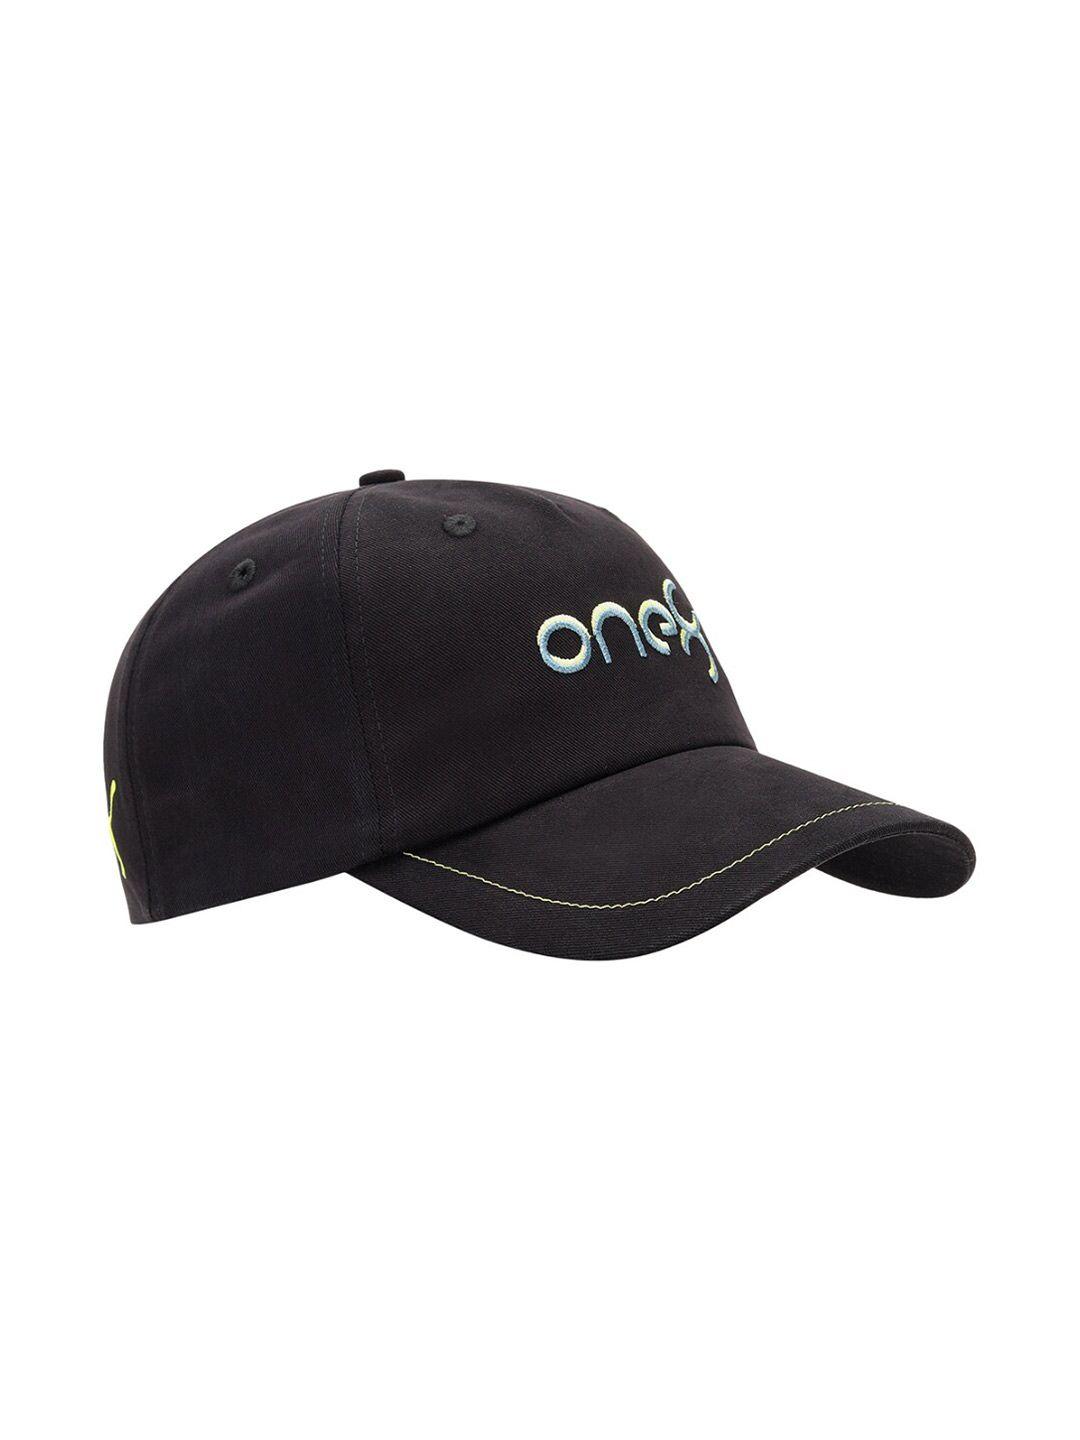 one8 x puma unisex black & off white embroidered baseball cap